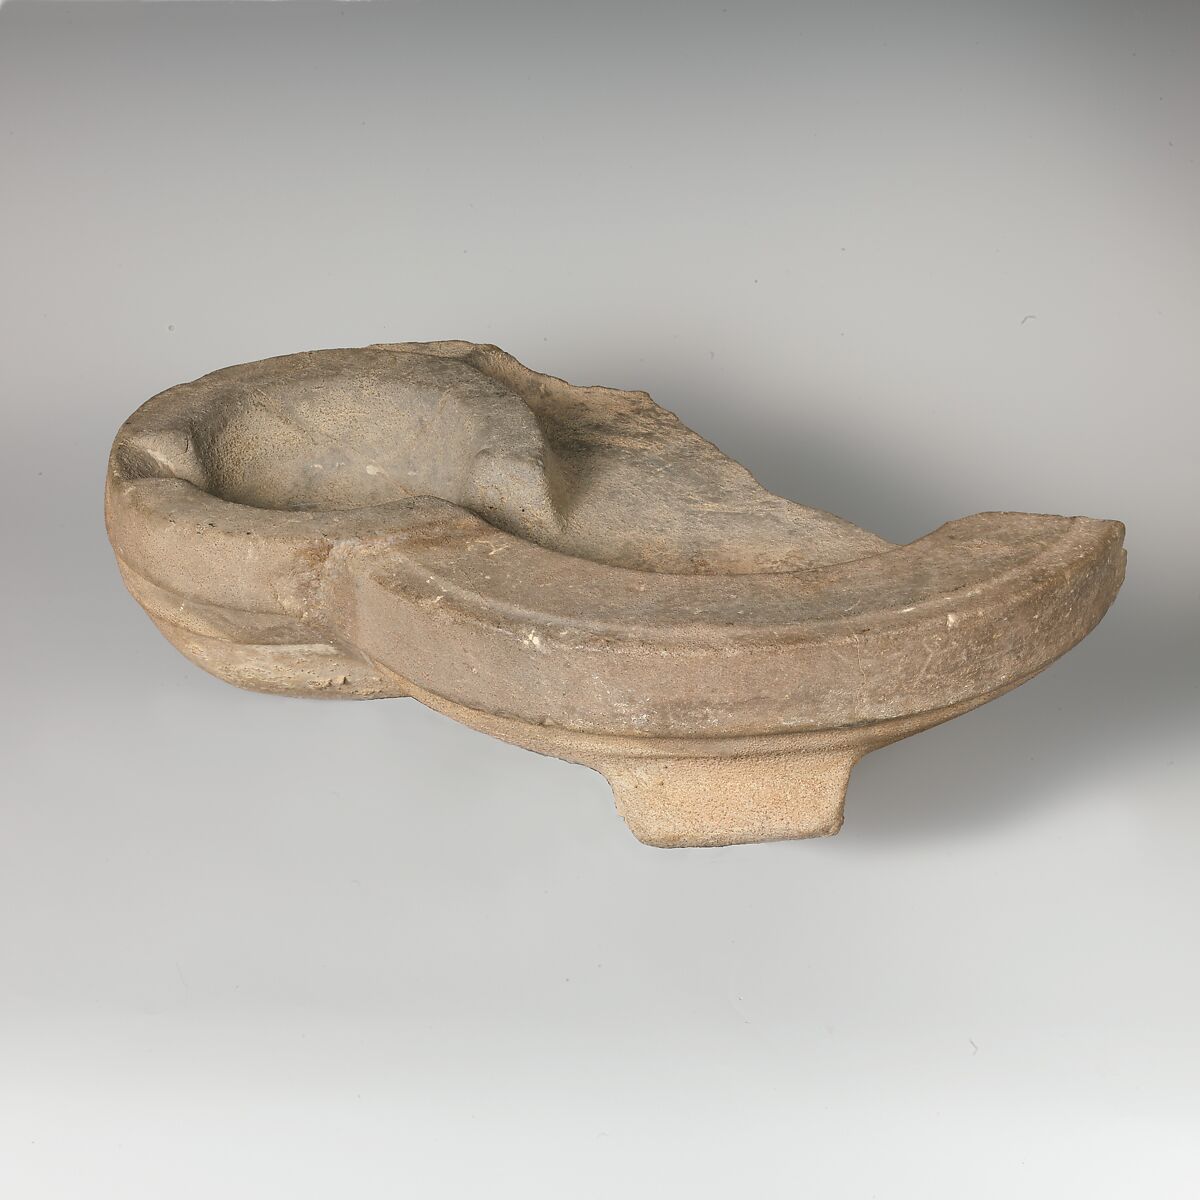 Fragmentary stone oil lamp, Stone, Minoan 